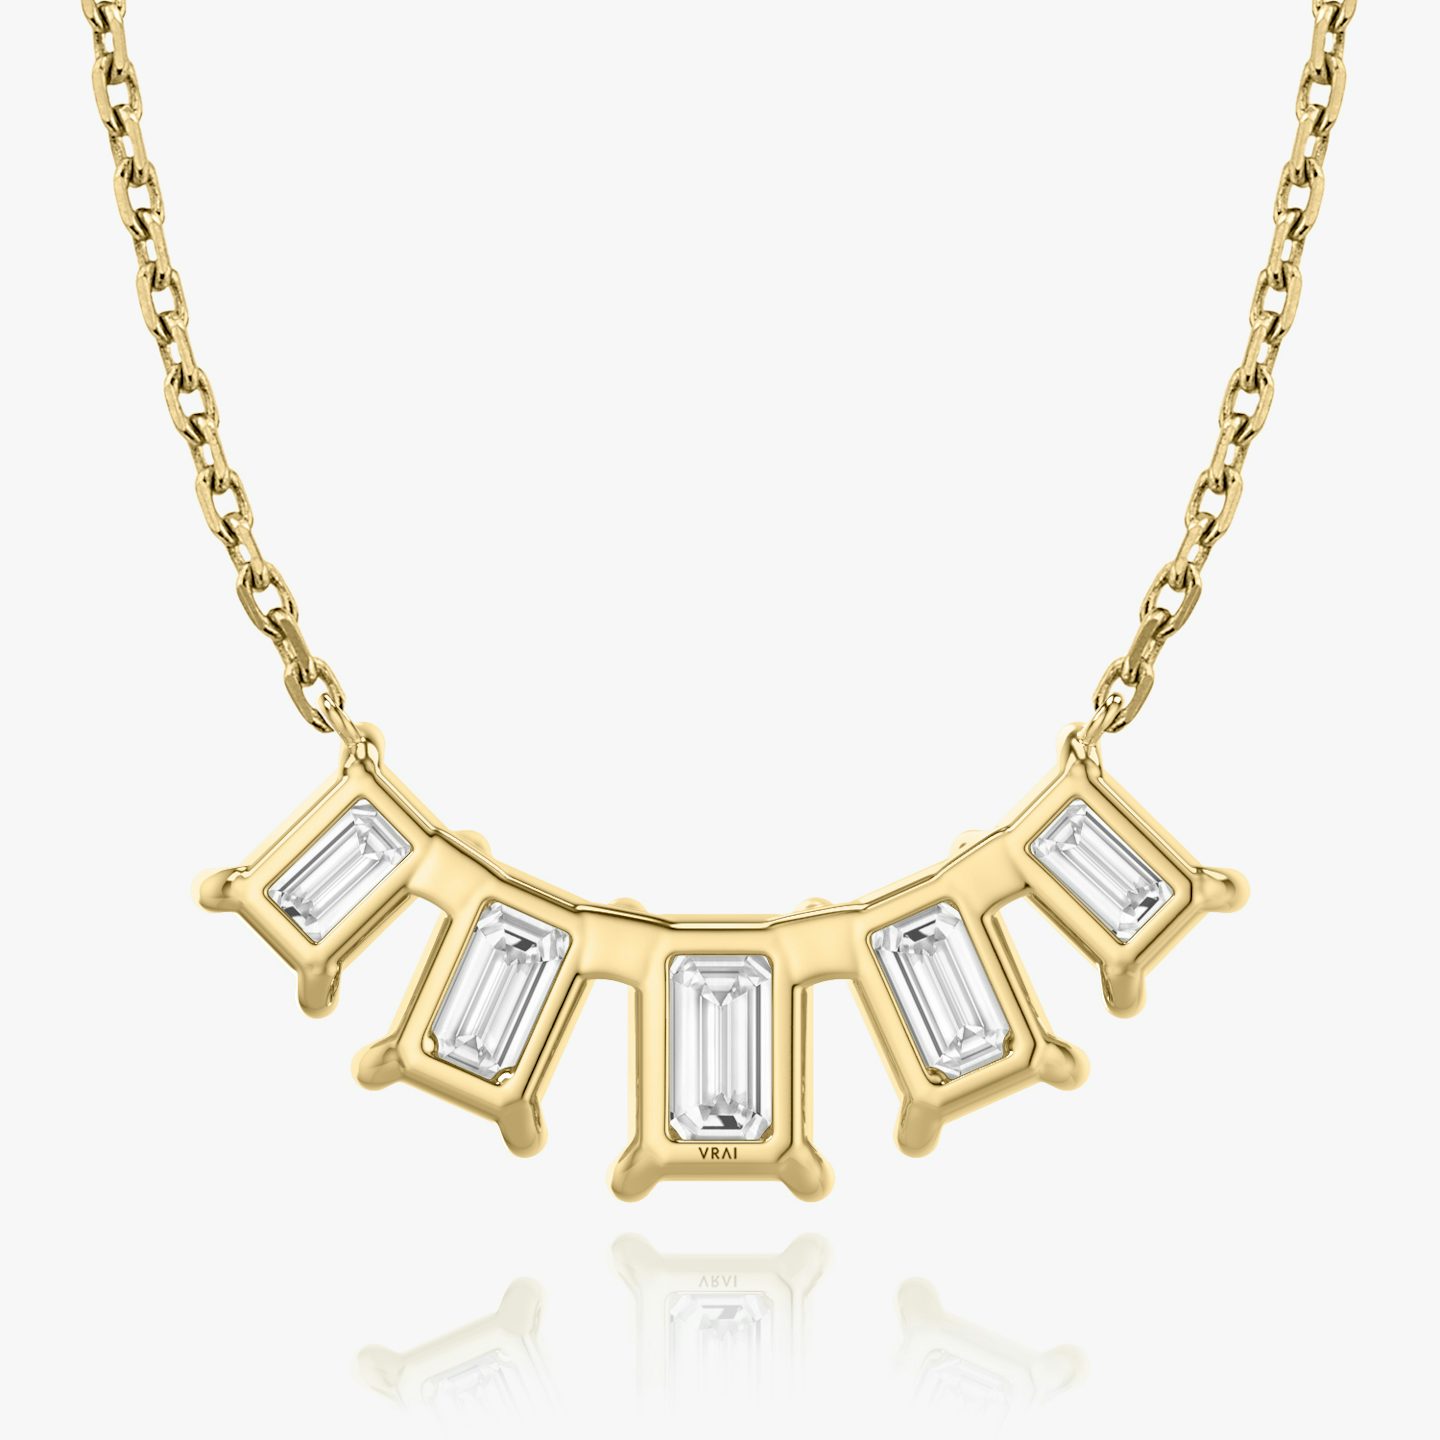 undefined | Emerald | 14k | Yellow Gold | diamondCount: 5 | diamondSize: large | chainLength: 16-18